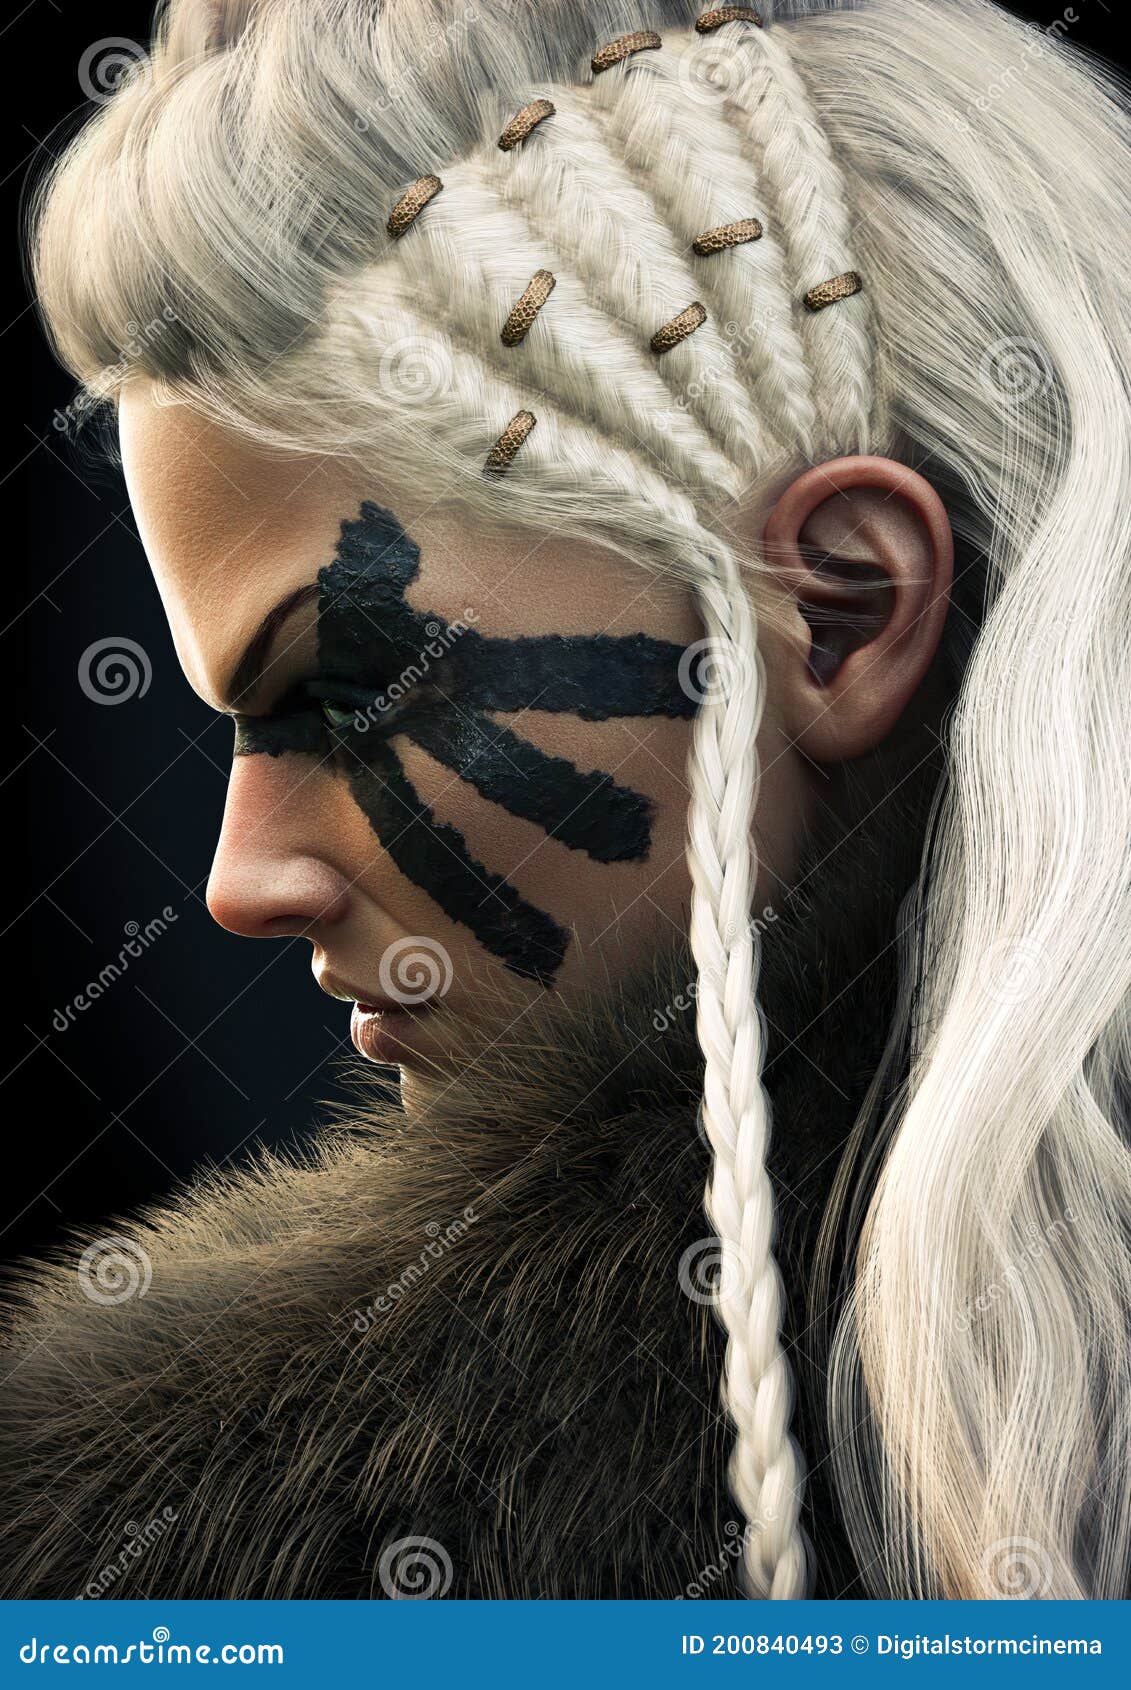 Vikingos Peluca trenzada estilo, peluca vikinga, peluca traje de